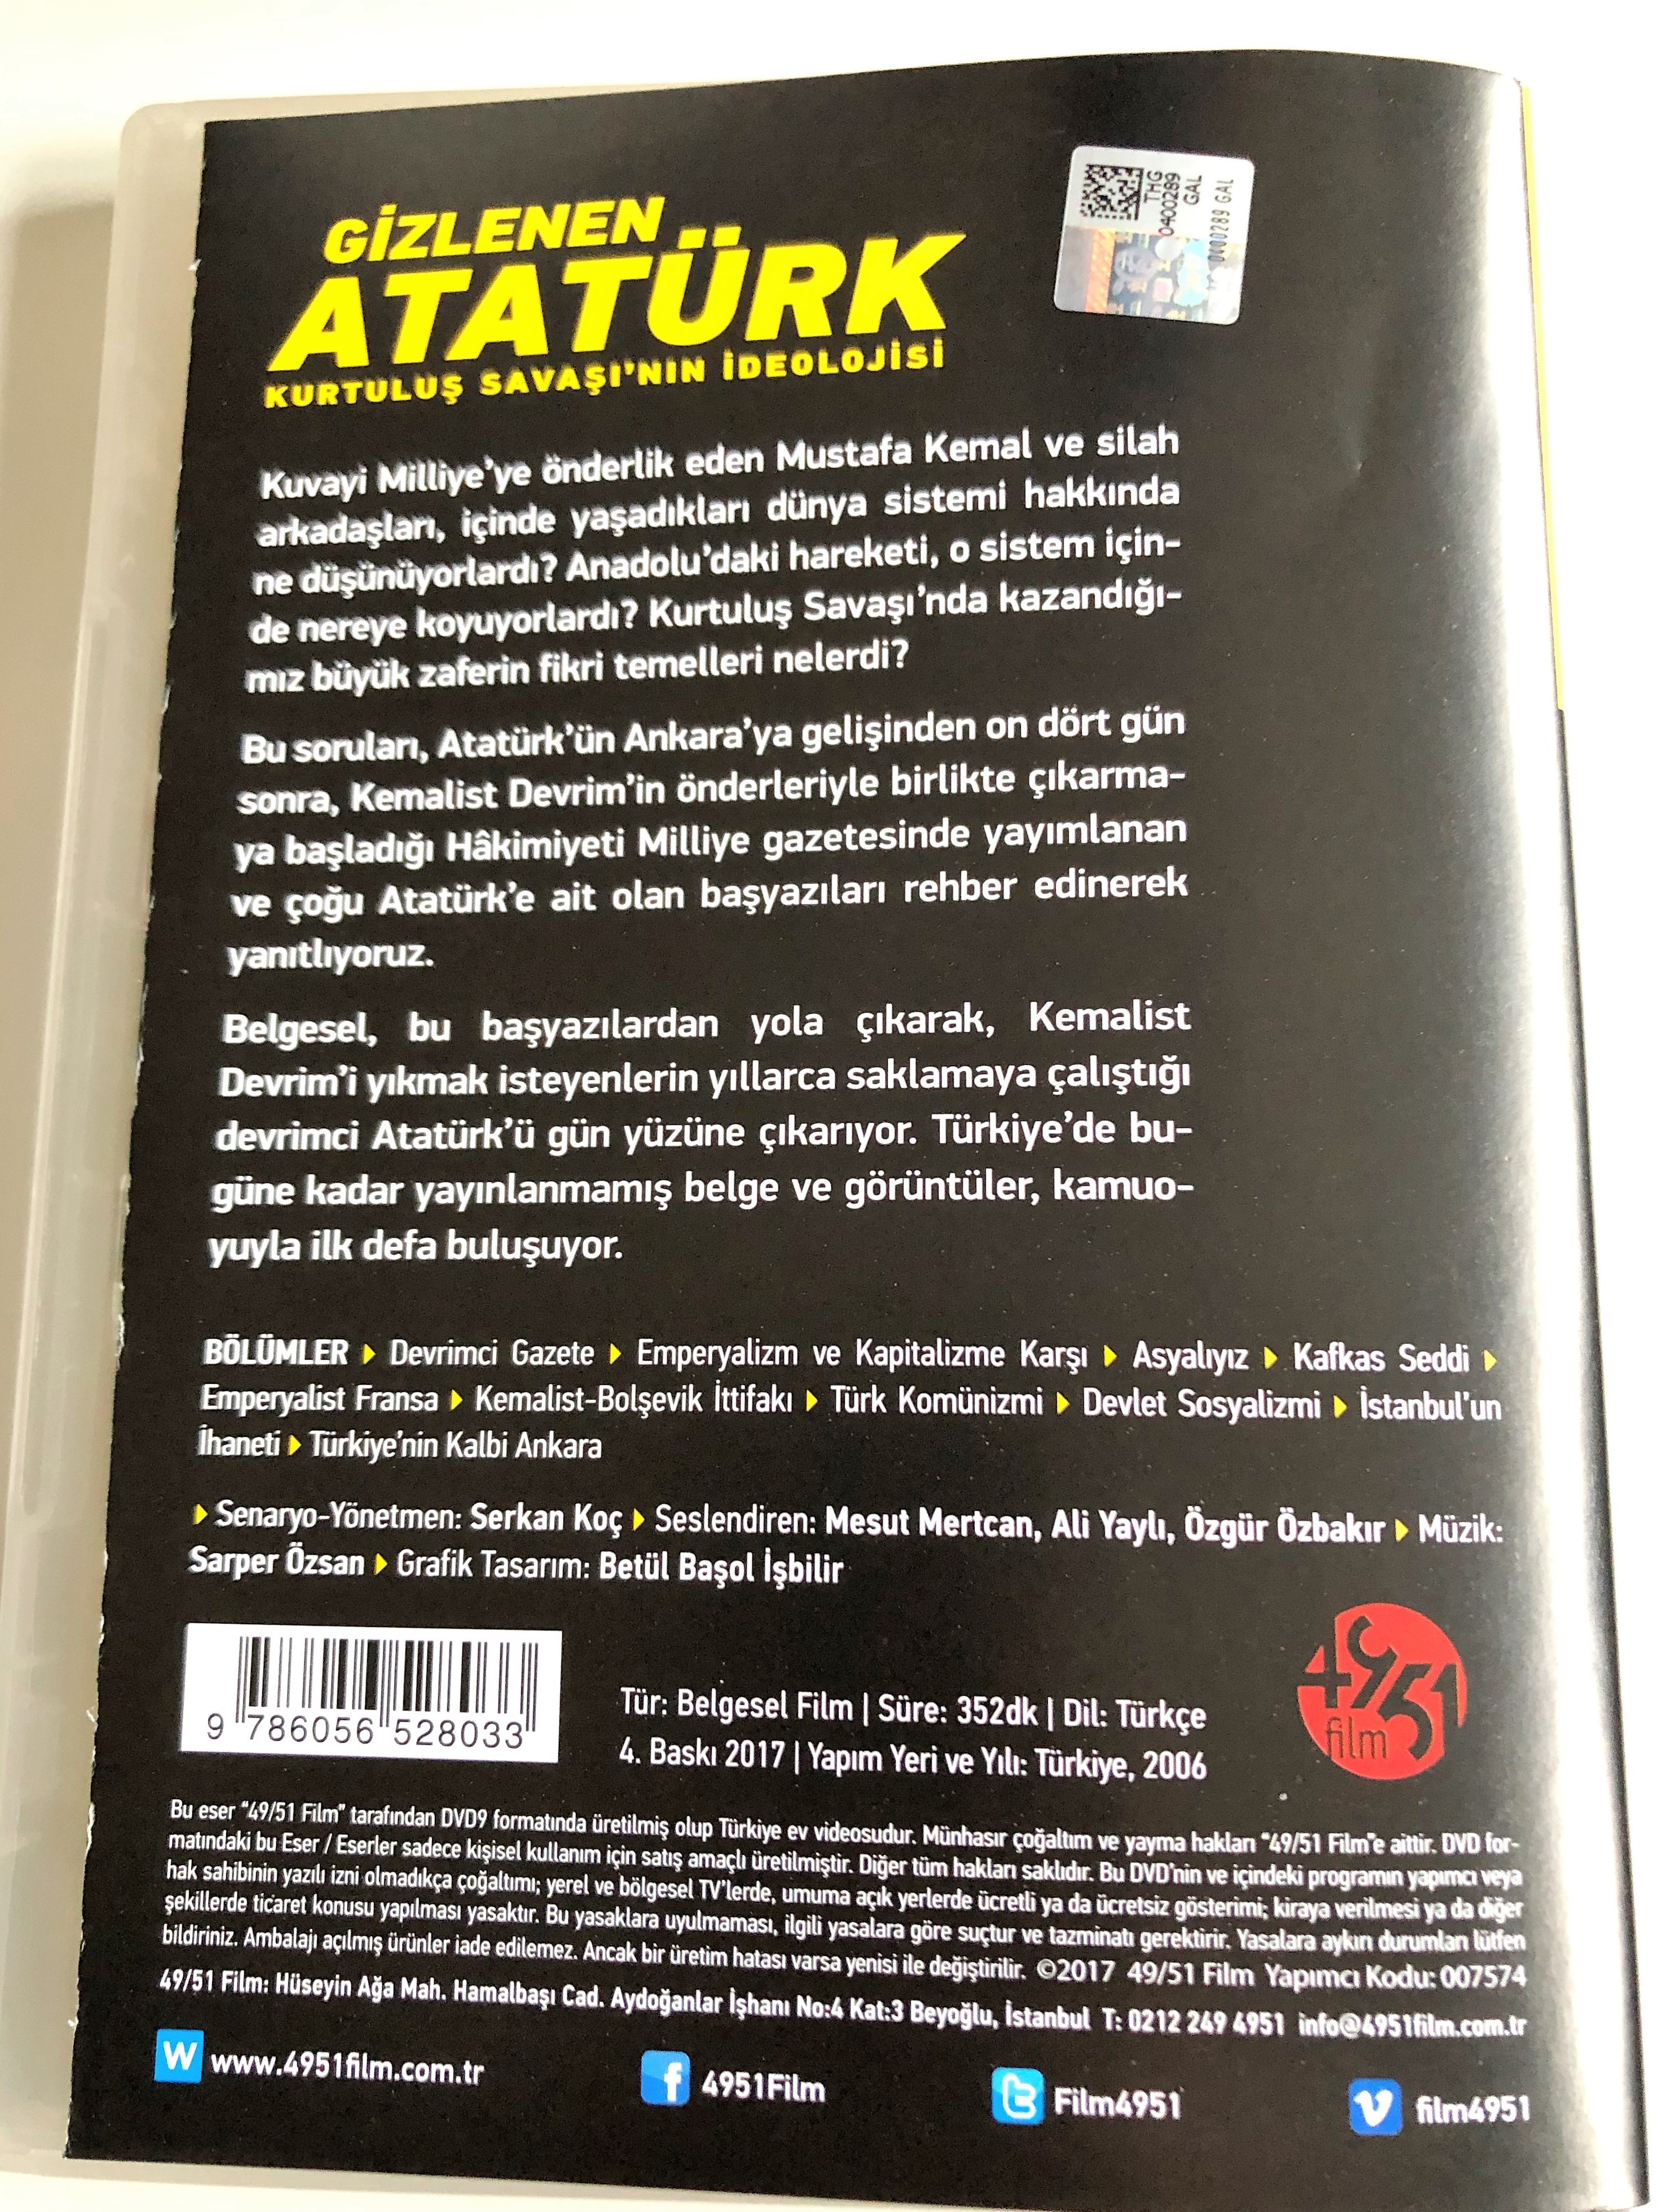 gizlenen-atat-rk-kurtulu-sava-n-n-deolojisi-dvd-2017-atat-rk-the-ideology-of-the-independence-war-directed-by-serkan-ko-4th-edition-2-.jpg